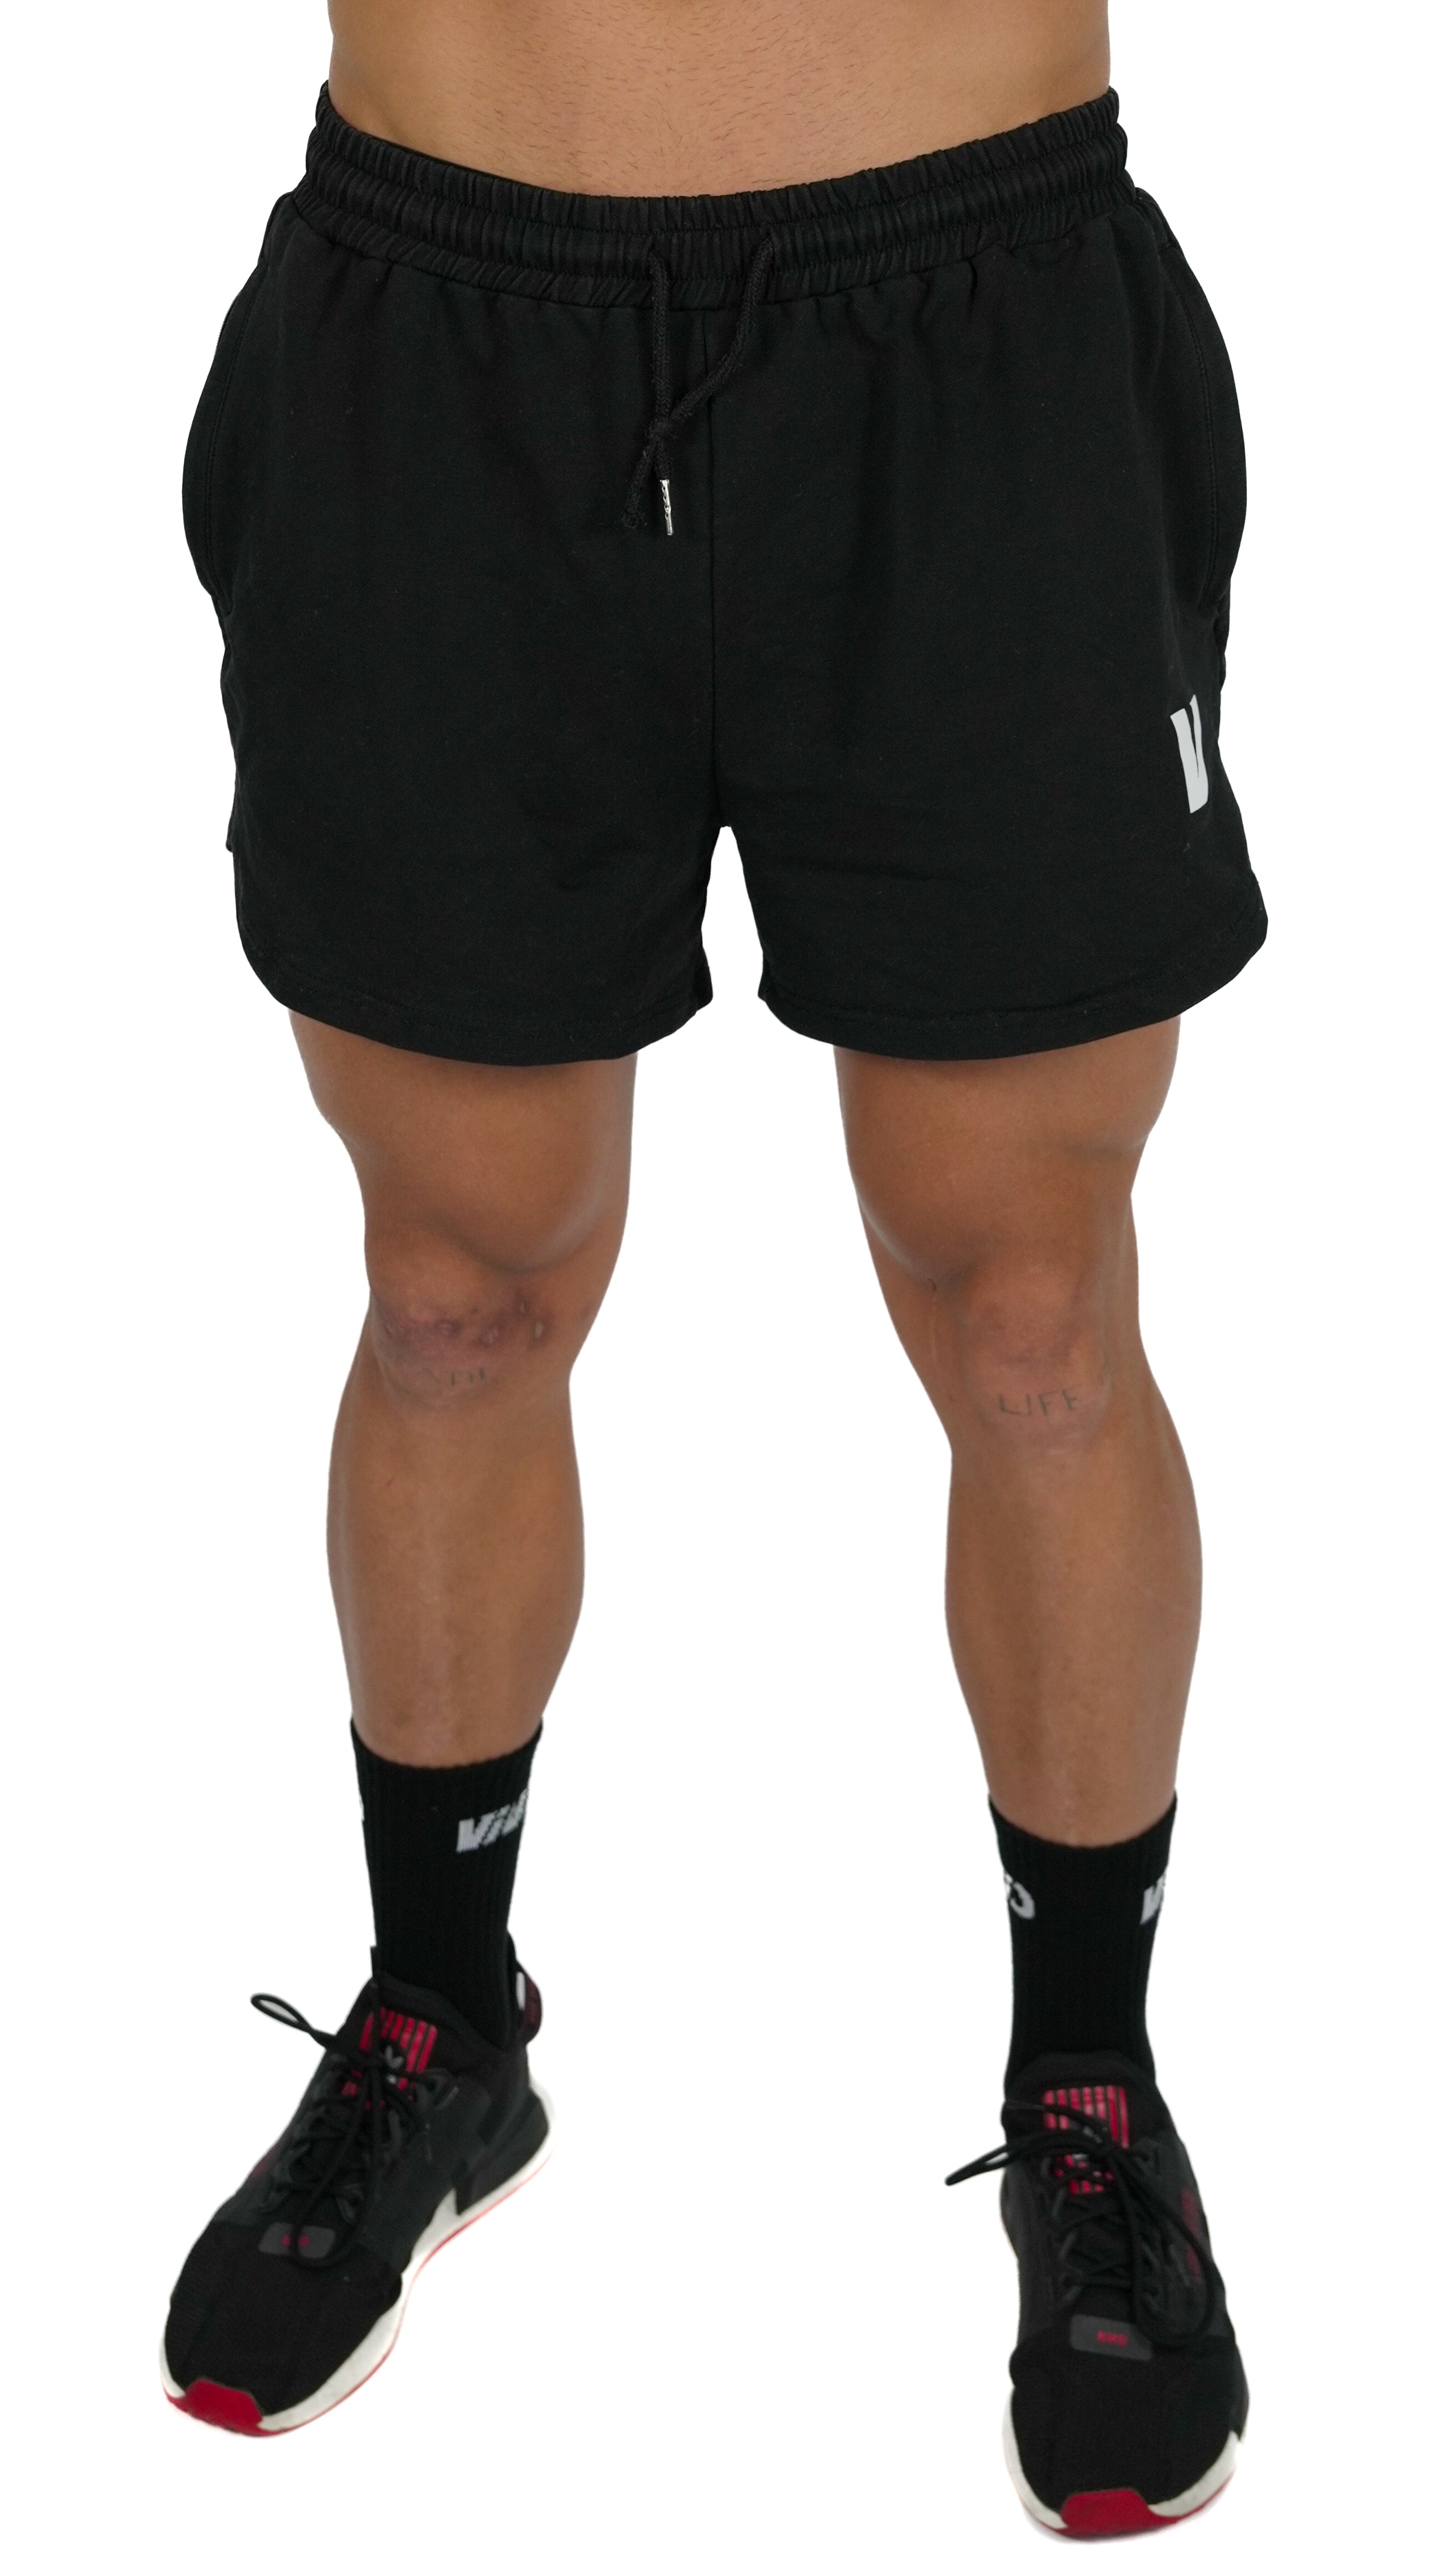 Quad Cut Shorts - Black